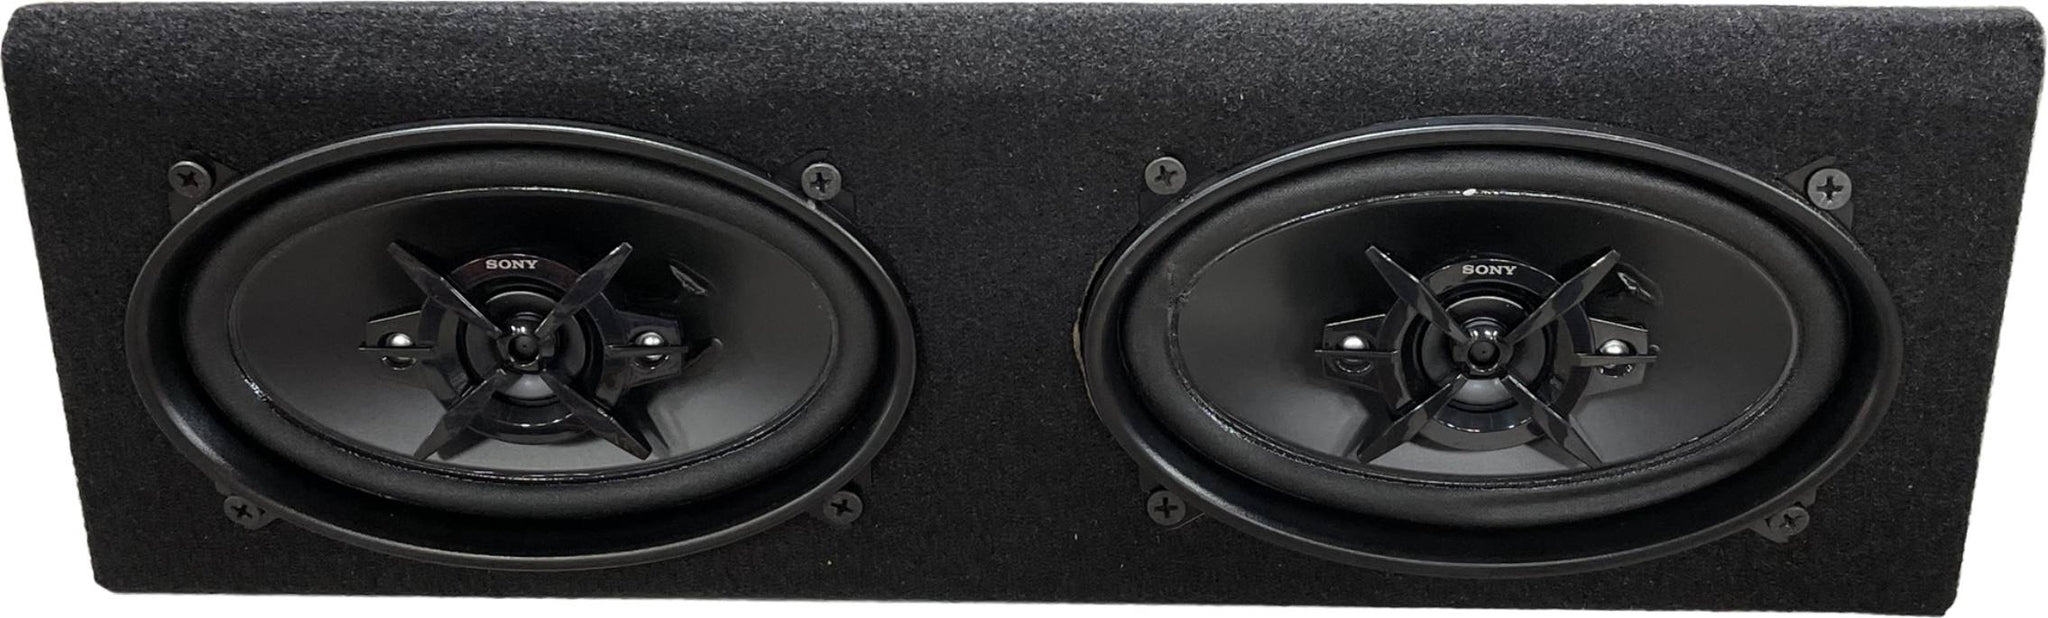 Cajón w/Sony speakers XS-R4646(Re-Pack)